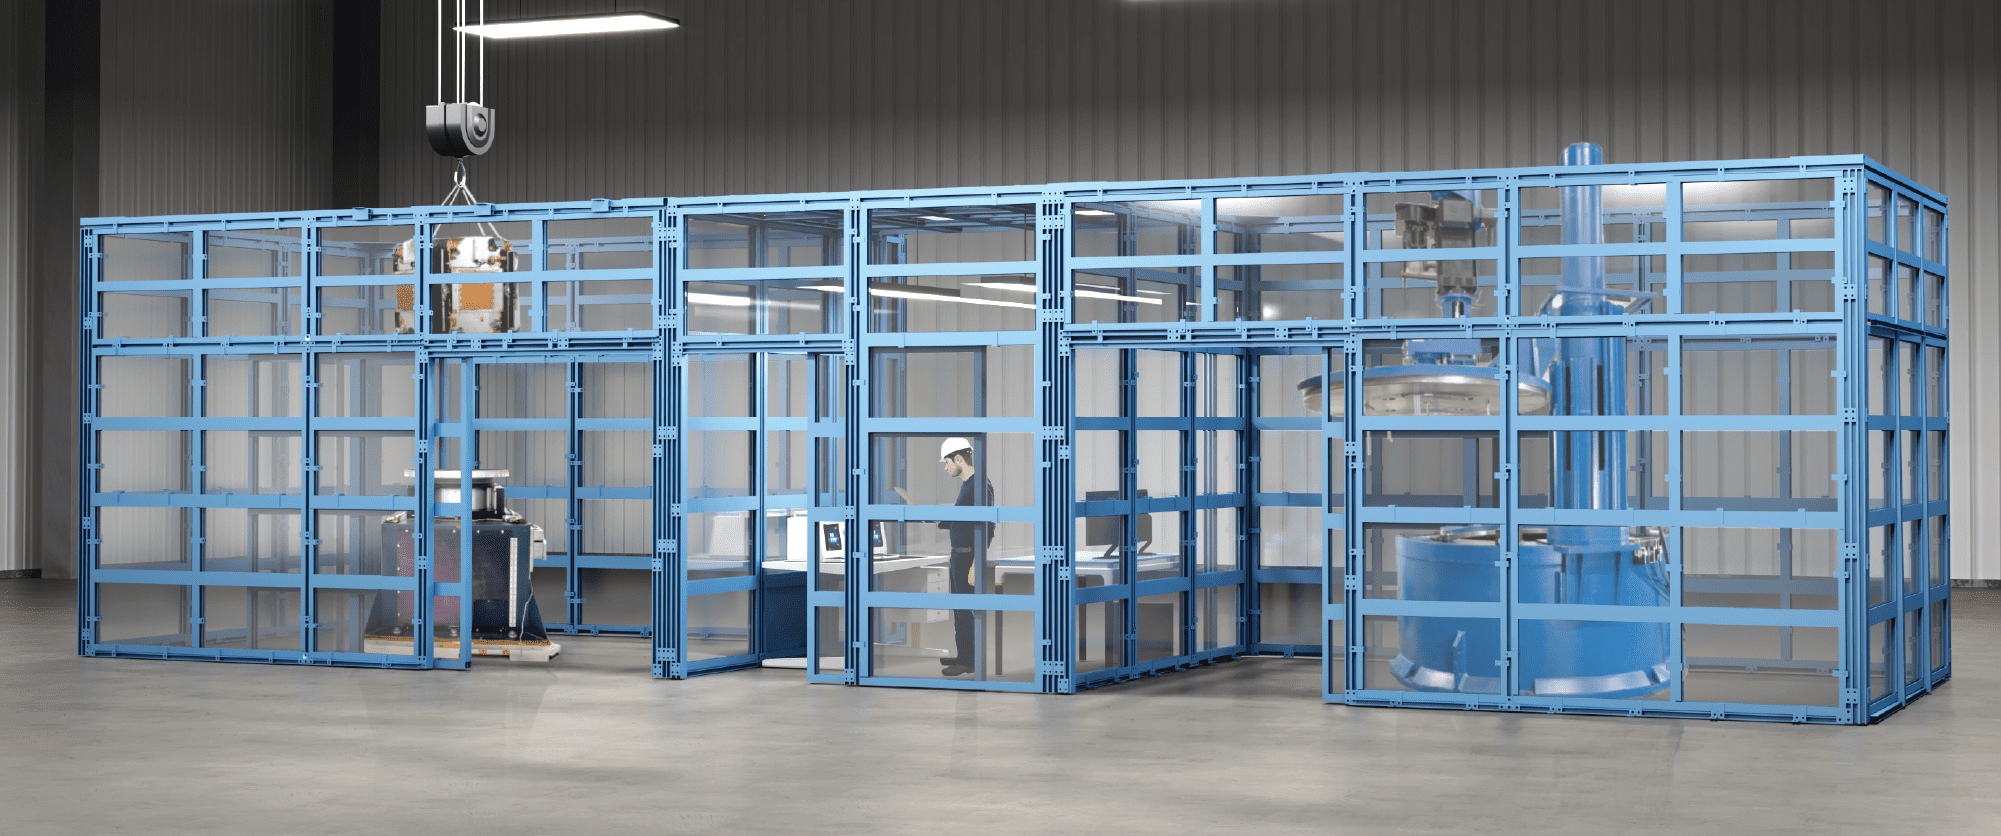 Large Shield room lab bays, render designed by TotalShield